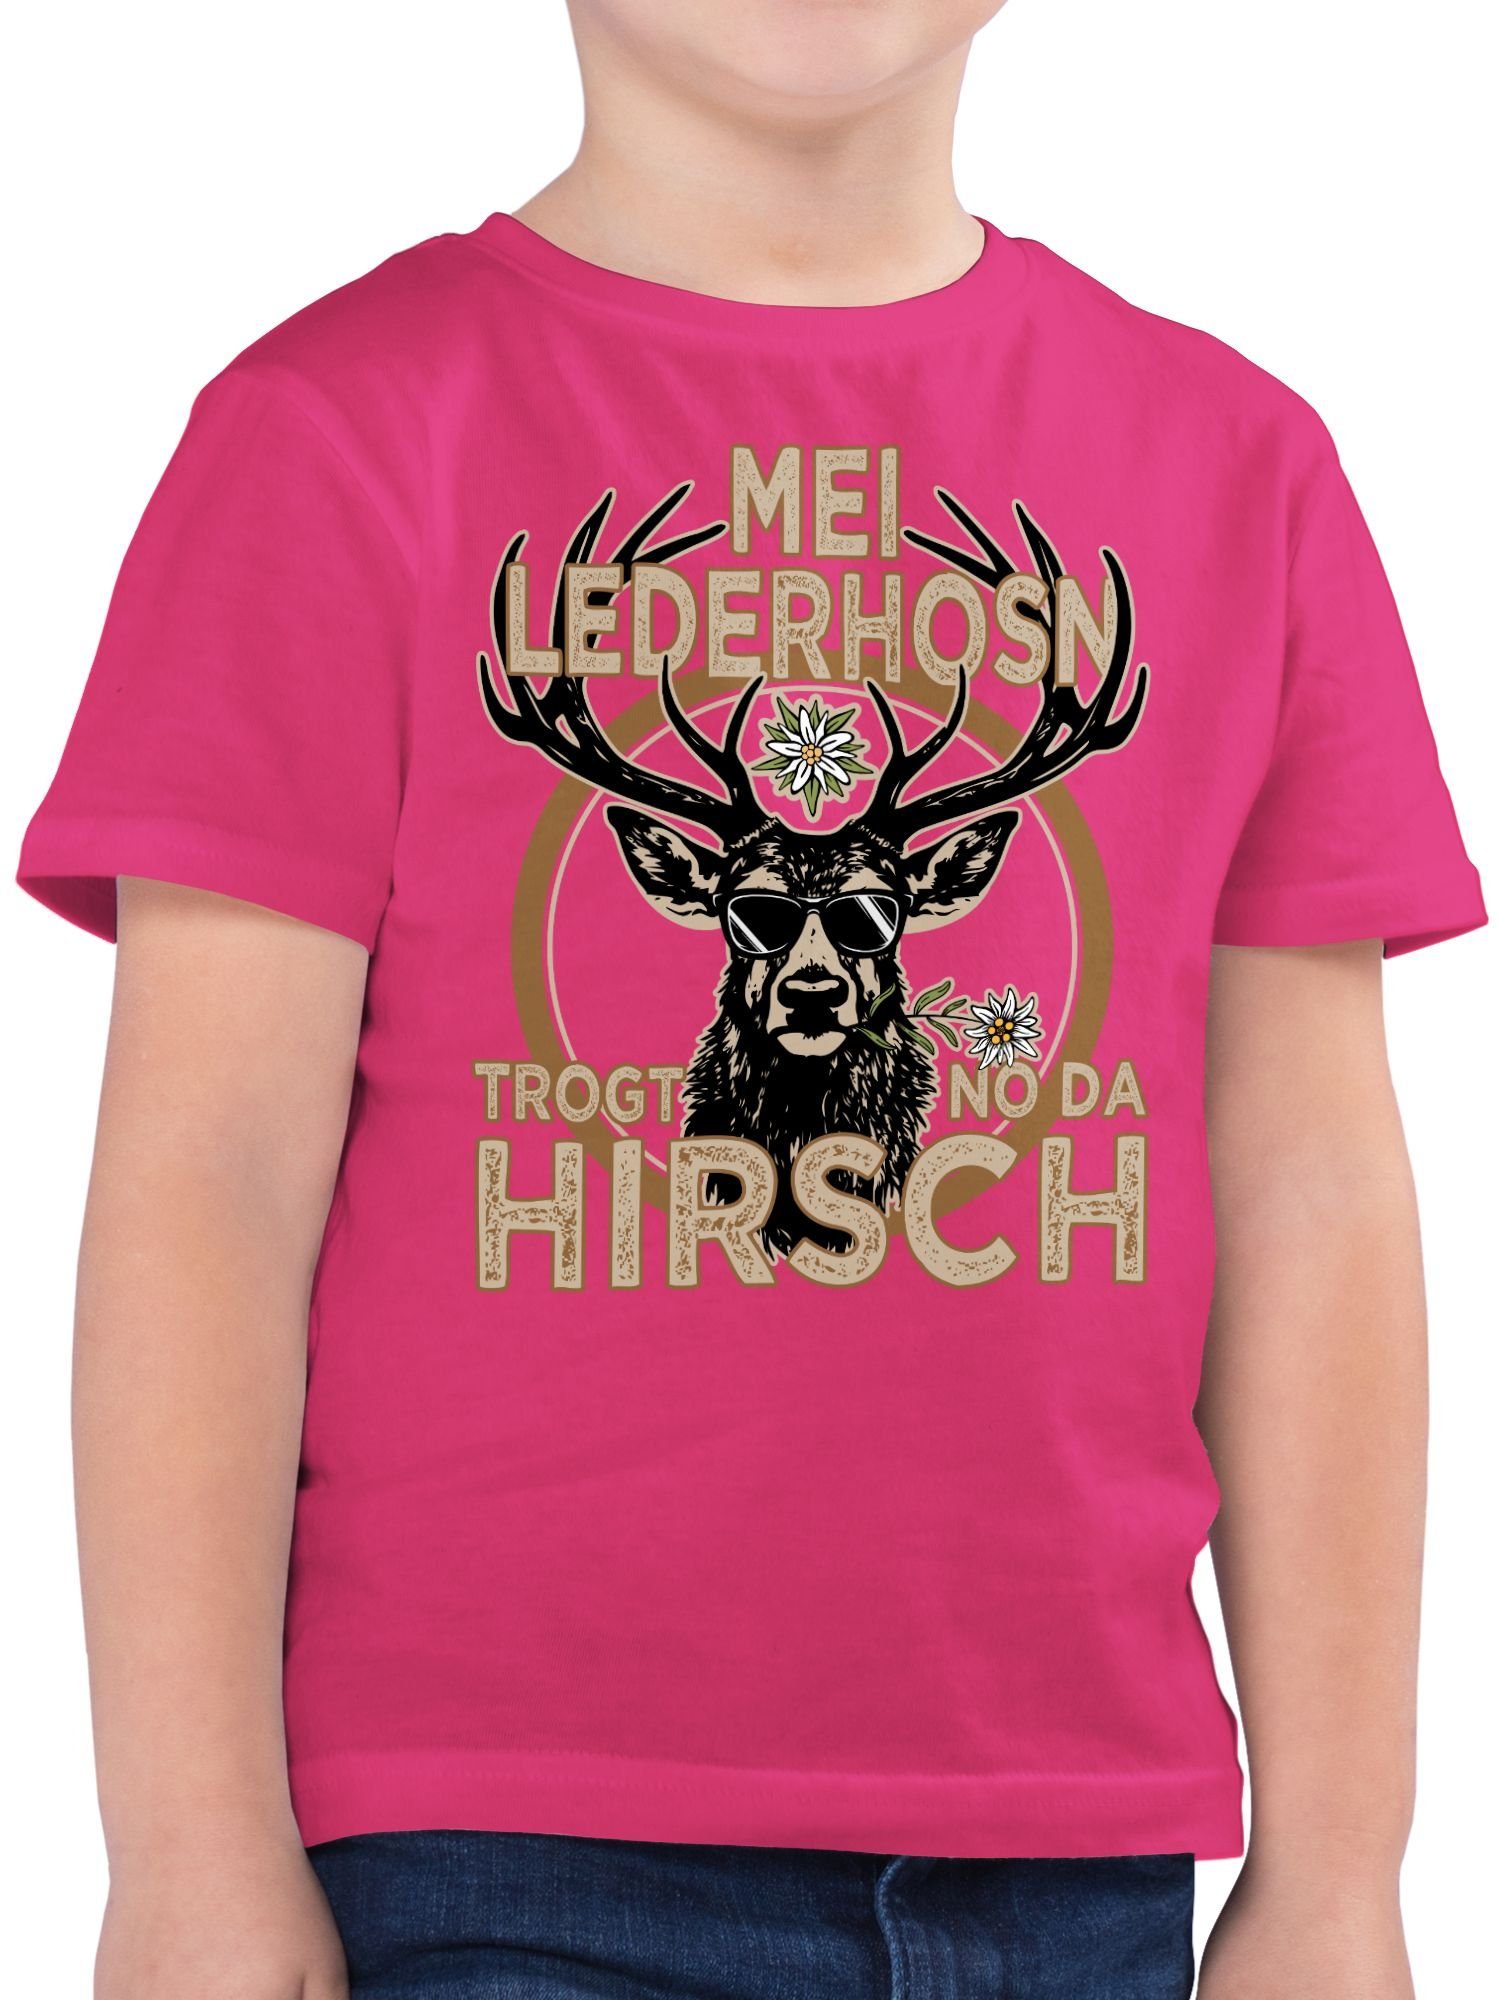 Shirtracer T-Shirt Trachten Outfit Lederhose Spruch Trägt der Hirsch Mode für Oktoberfest Kinder Outfit 03 Fuchsia